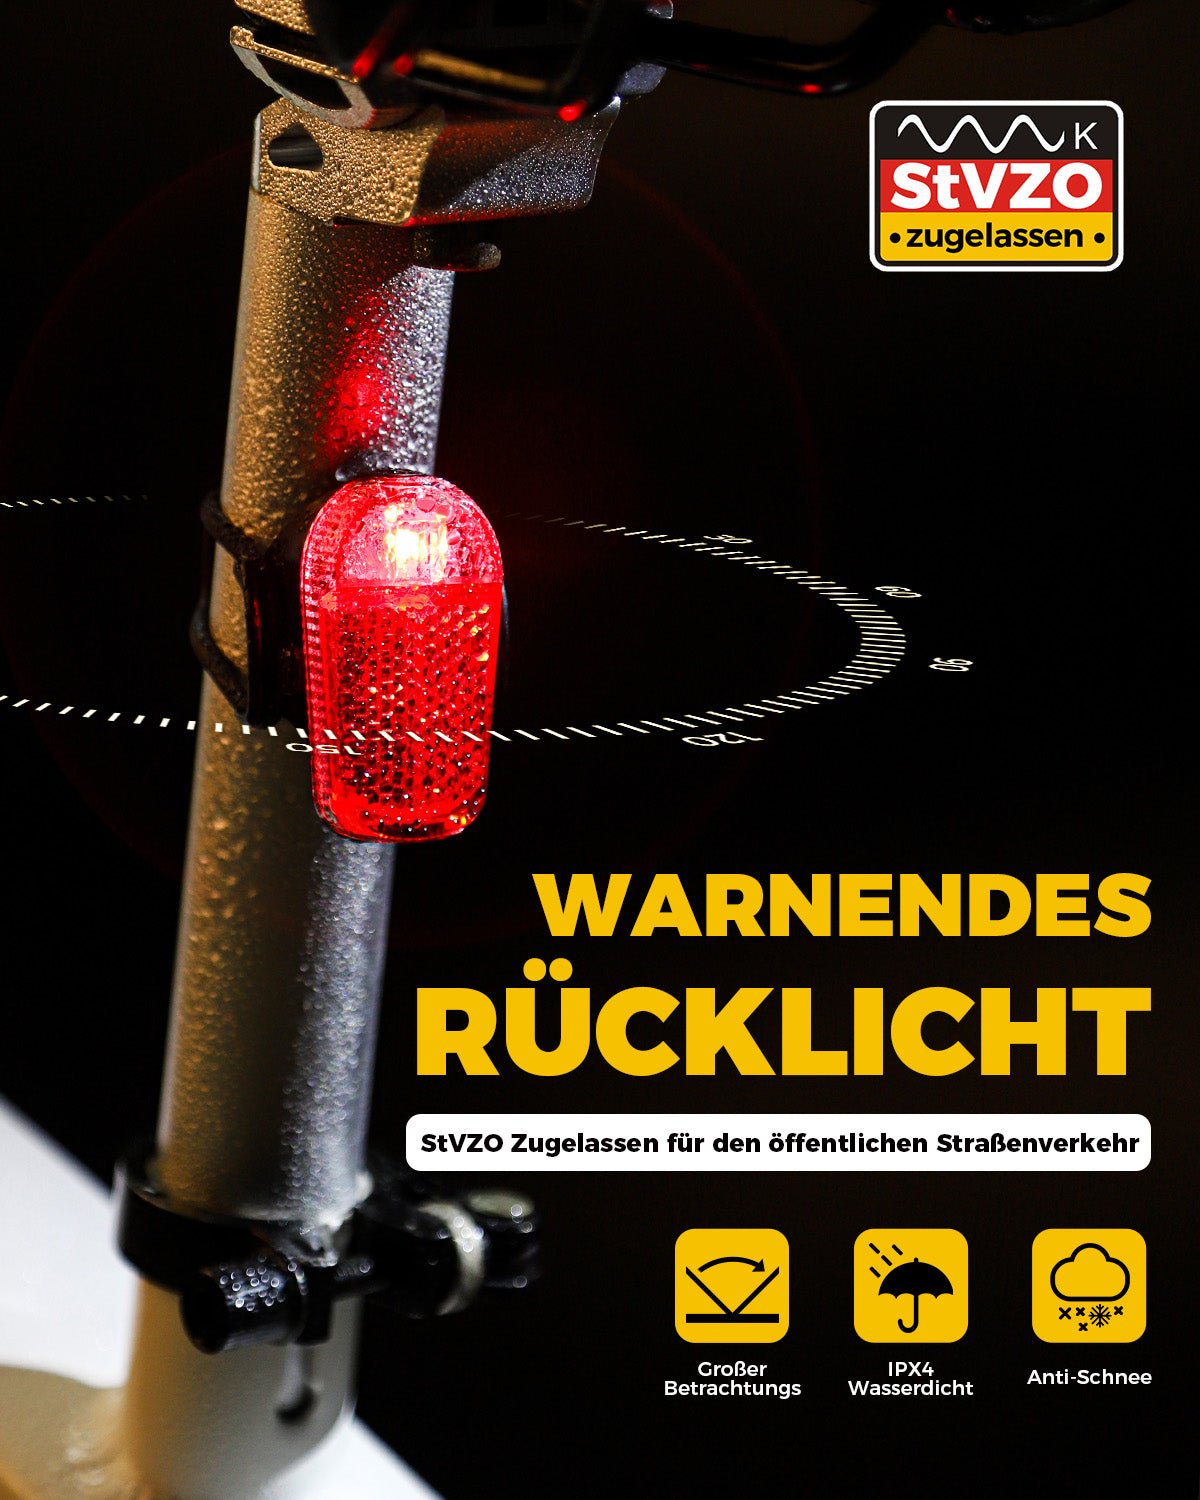 30 Lux StVZO Bike Light Set USB Rechargeable Lights VICTGOAL lights